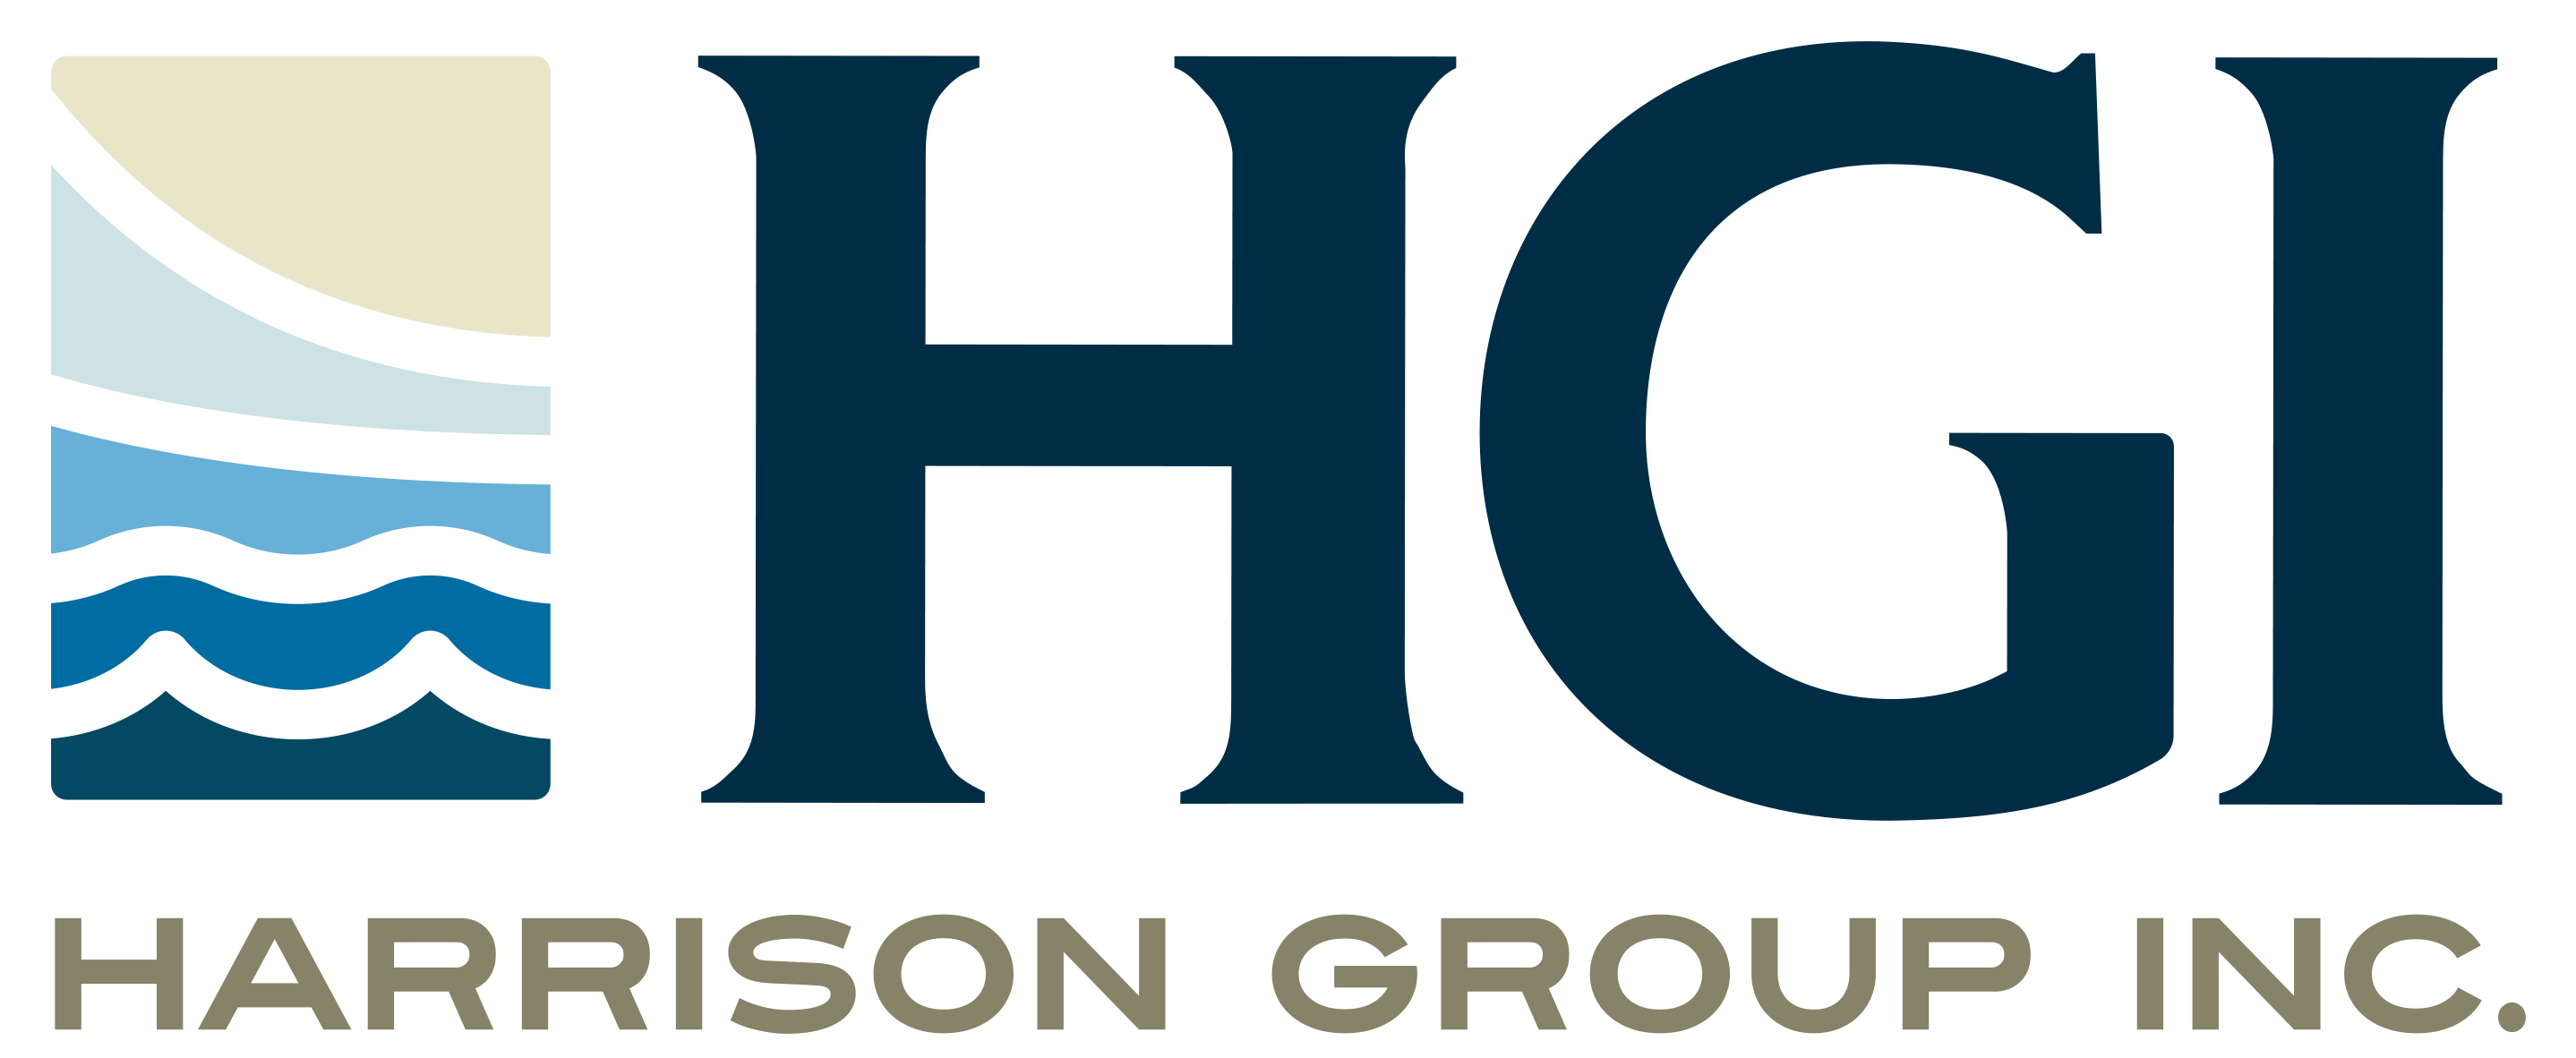 Harrison Group Inc.